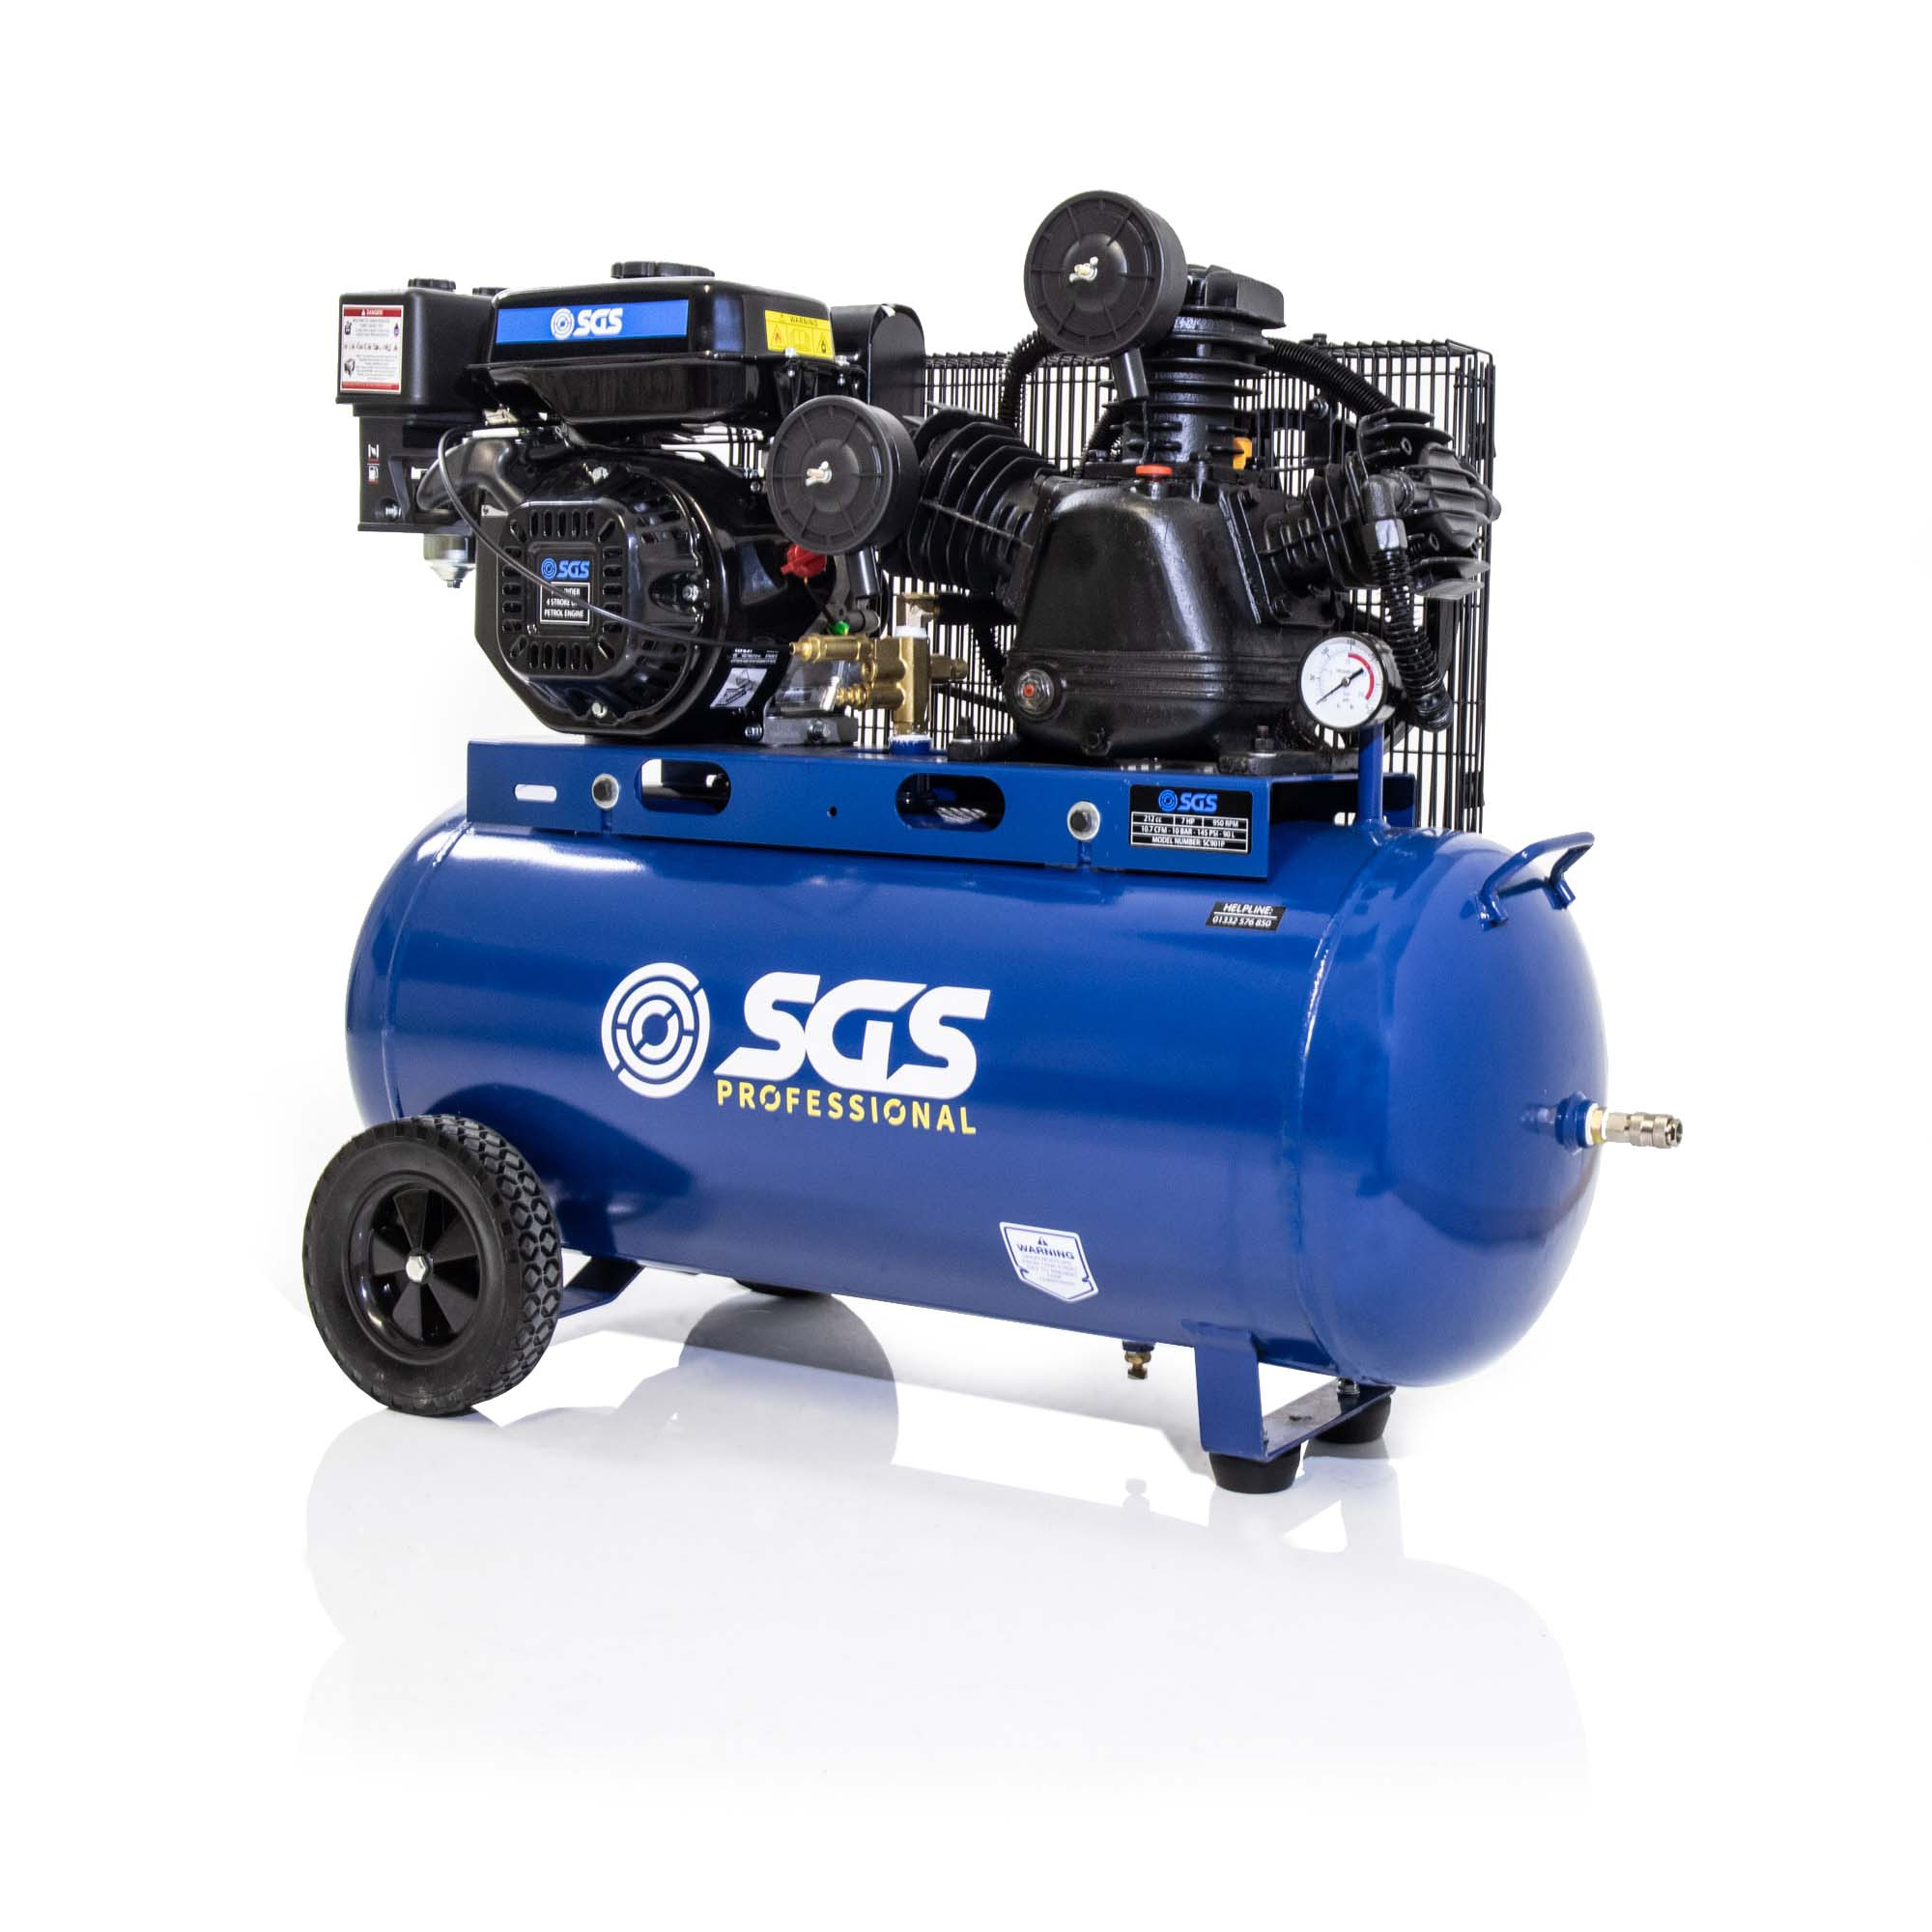 SGS 90升汽油驱动的空气压缩机专业- 10.7 cfm, 7.0 hp、90 l